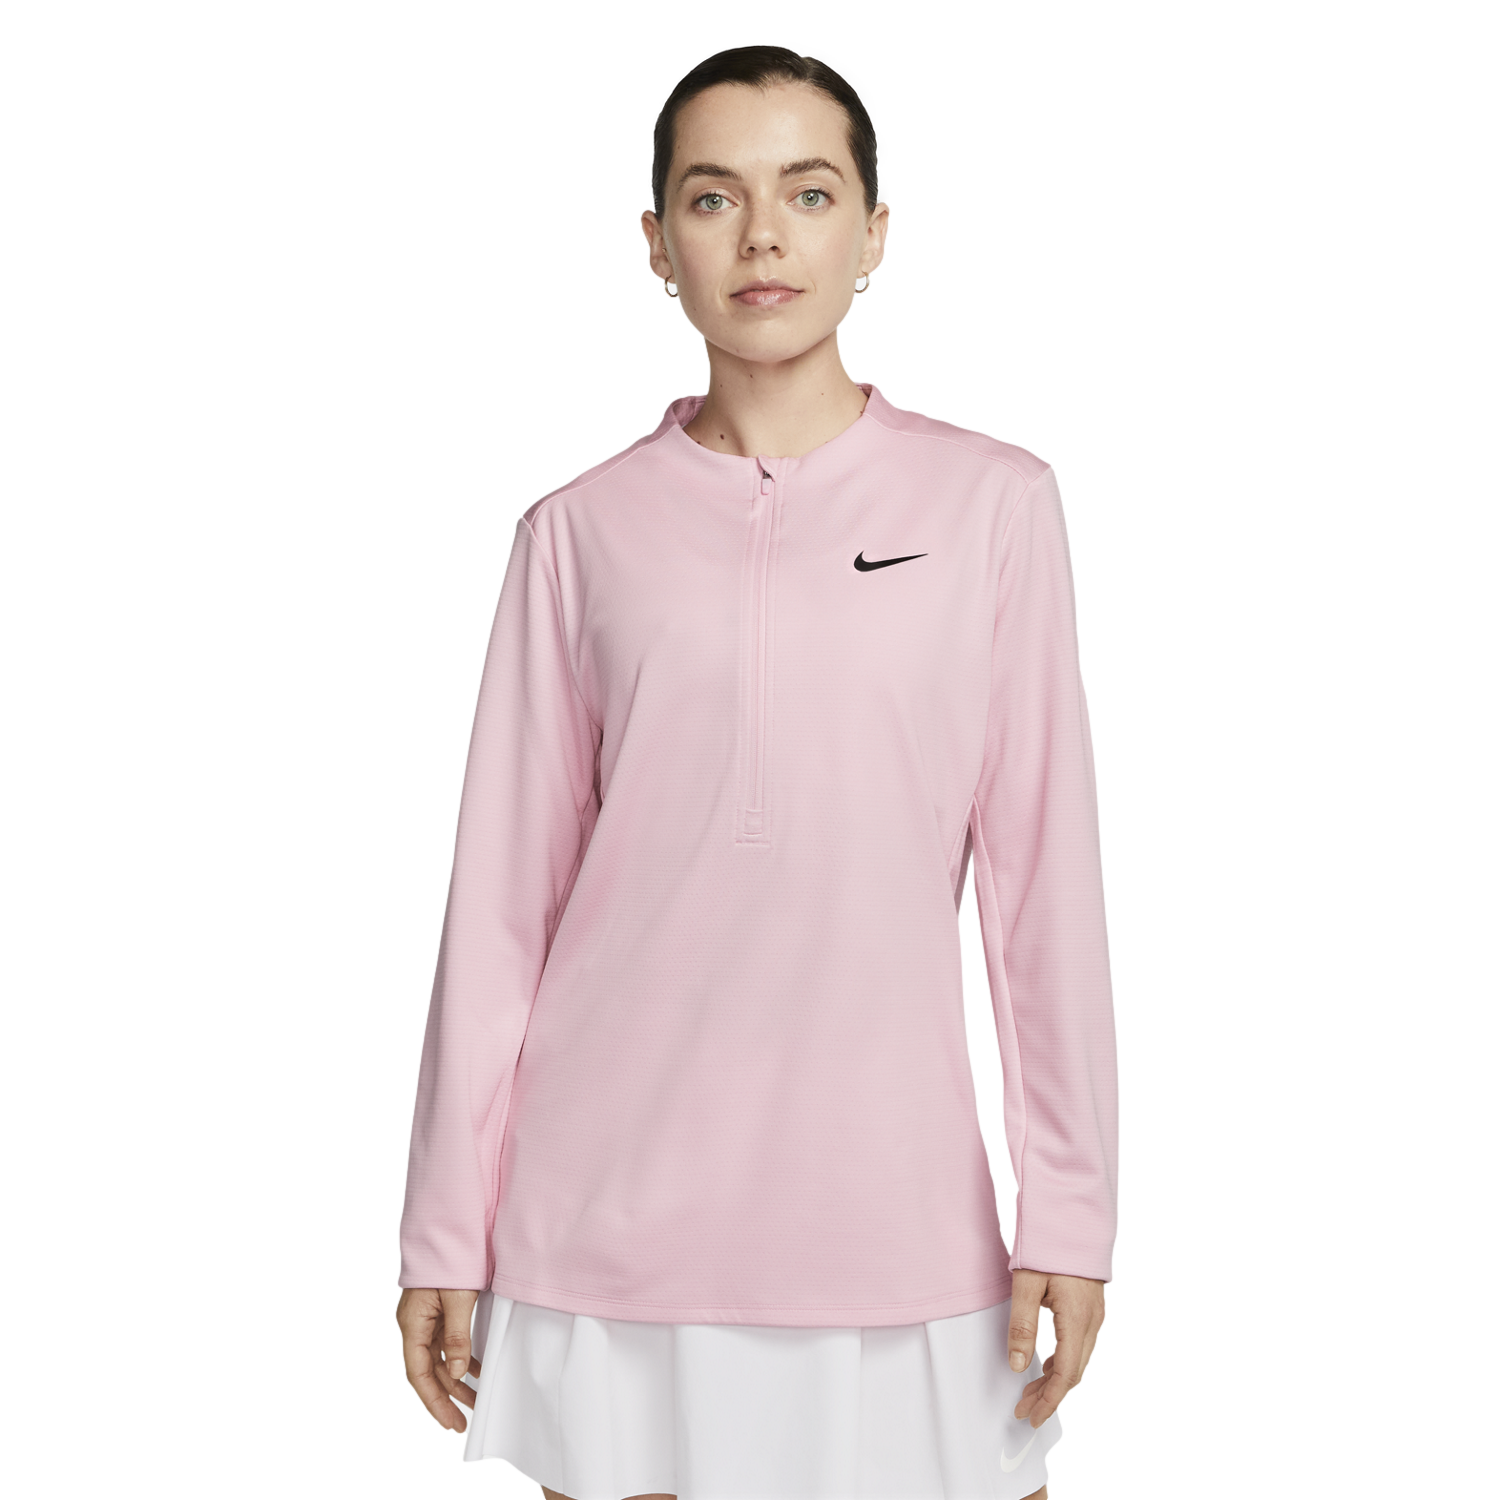 Nike Dri-FIT UV Advantage Women's Mock-Neck Golf Top.